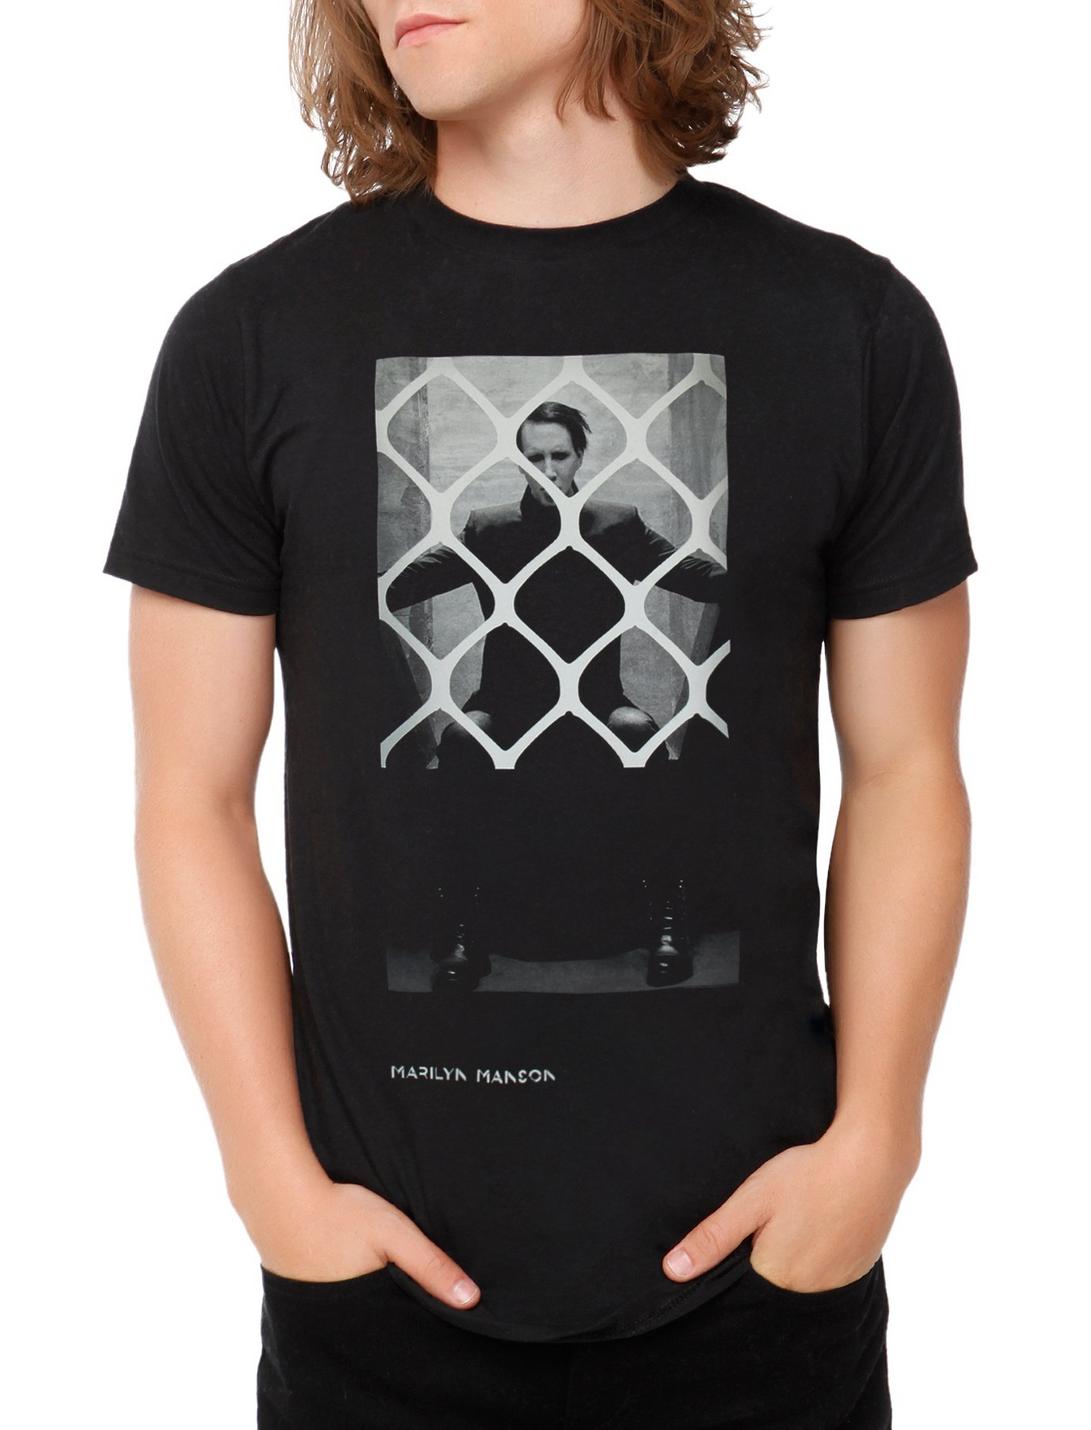 Marilyn Manson Chain Link T-Shirt, BLACK, hi-res